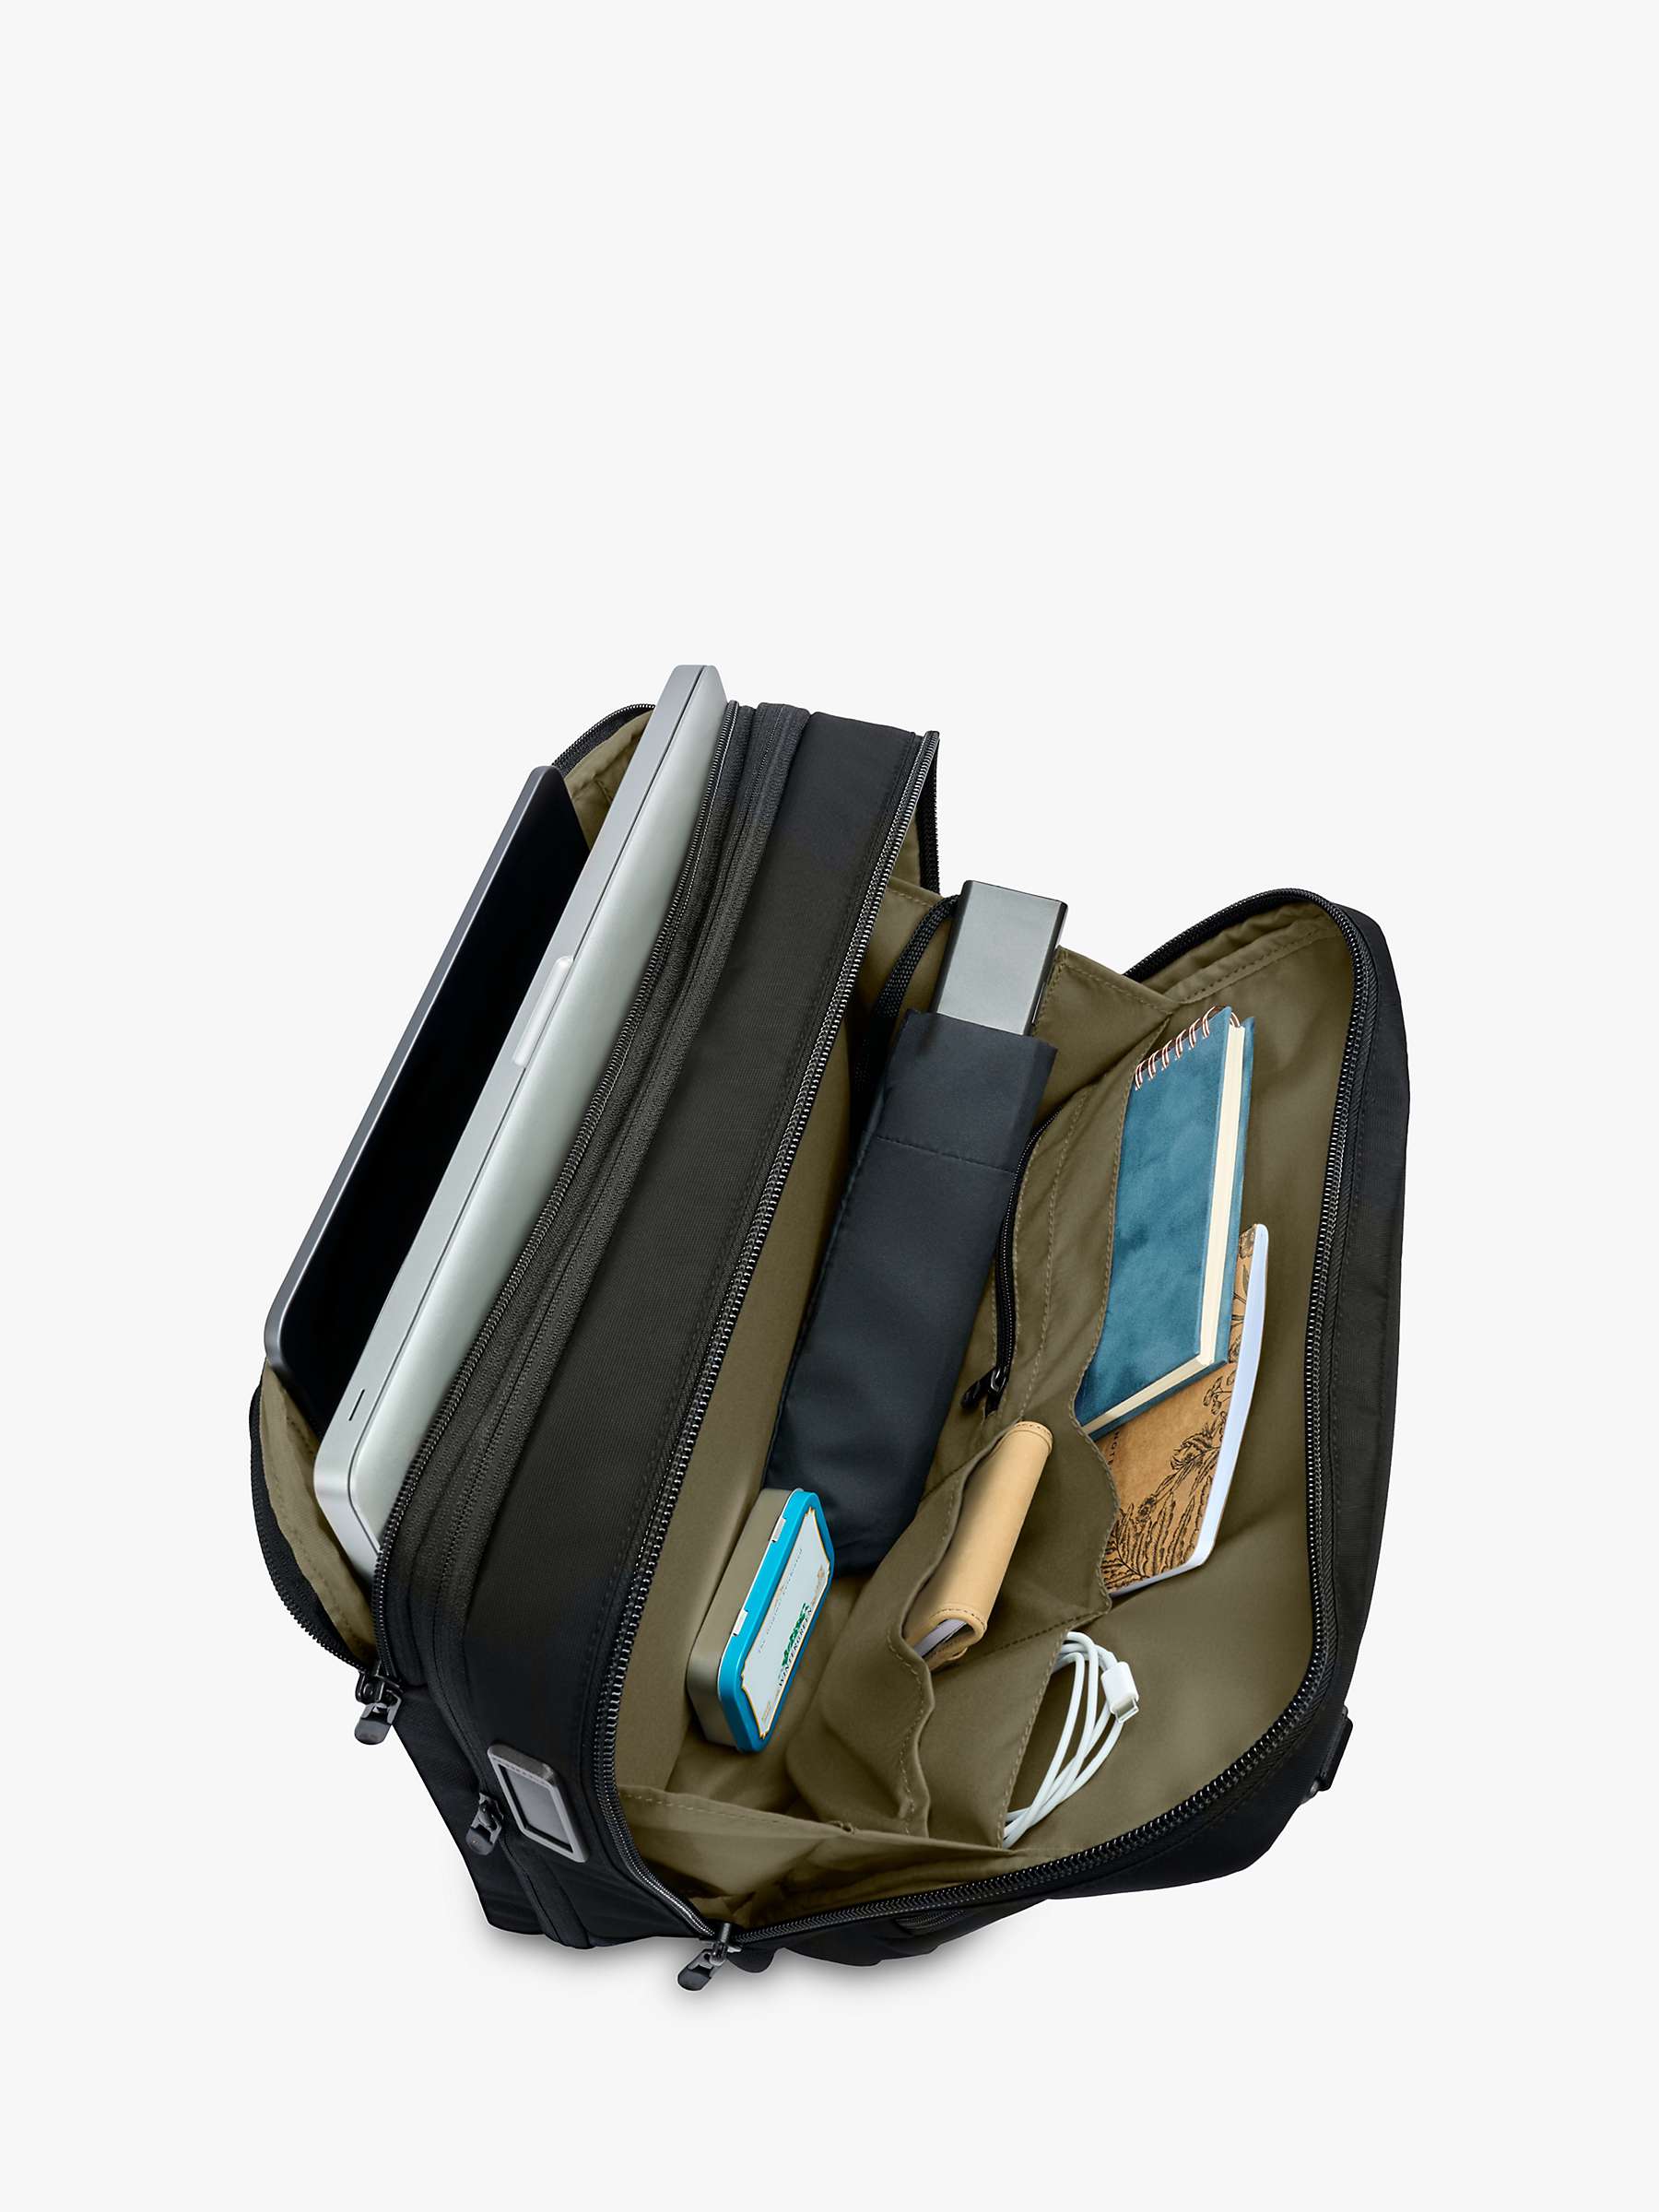 Buy Briggs & Riley HTA Medium Expandable Briefcase, Black Online at johnlewis.com